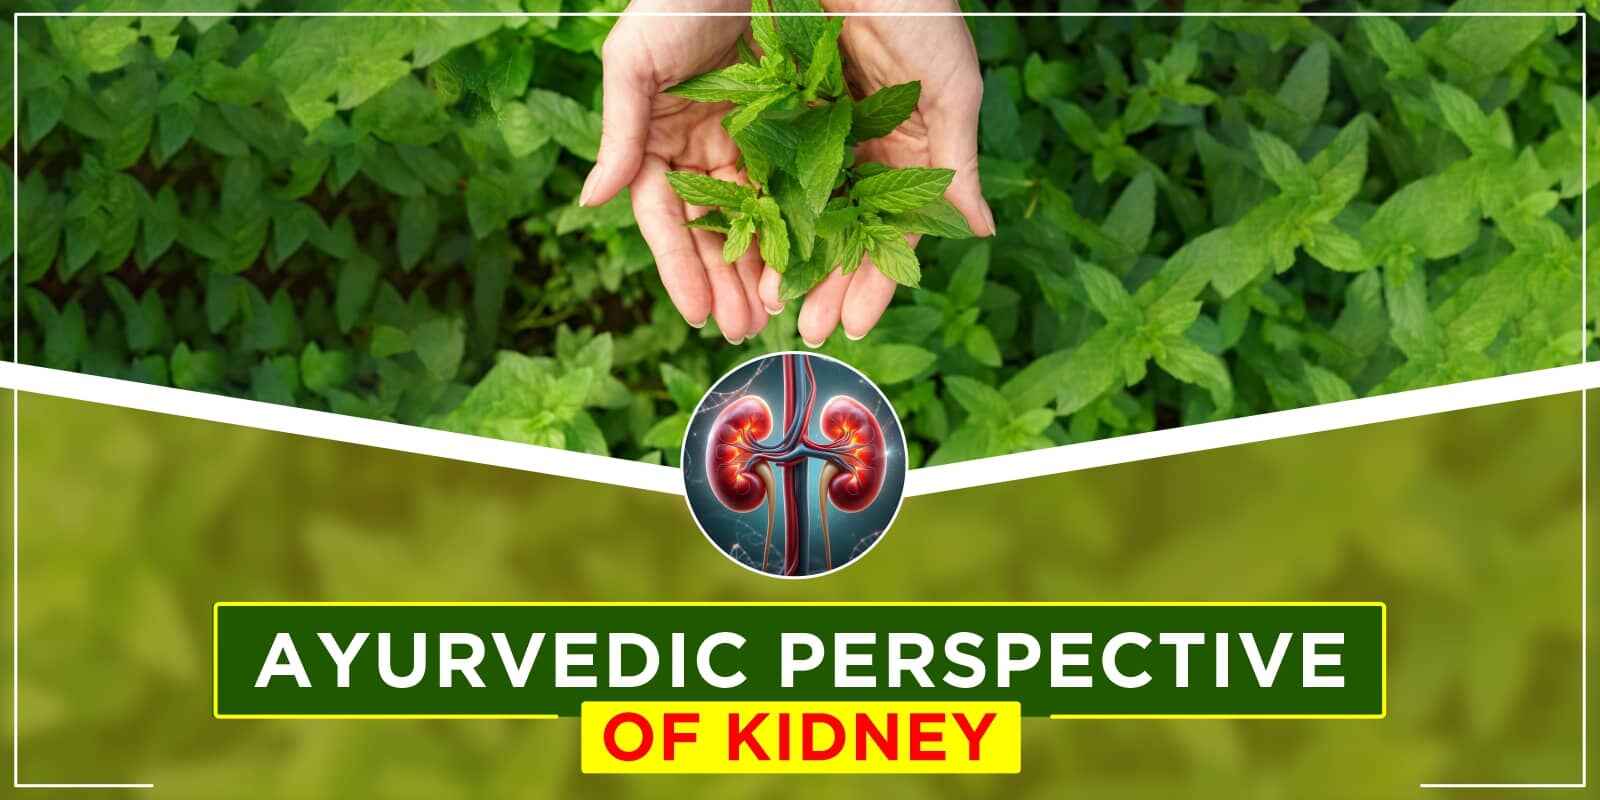 Ayurvedic Perspective of Kidney